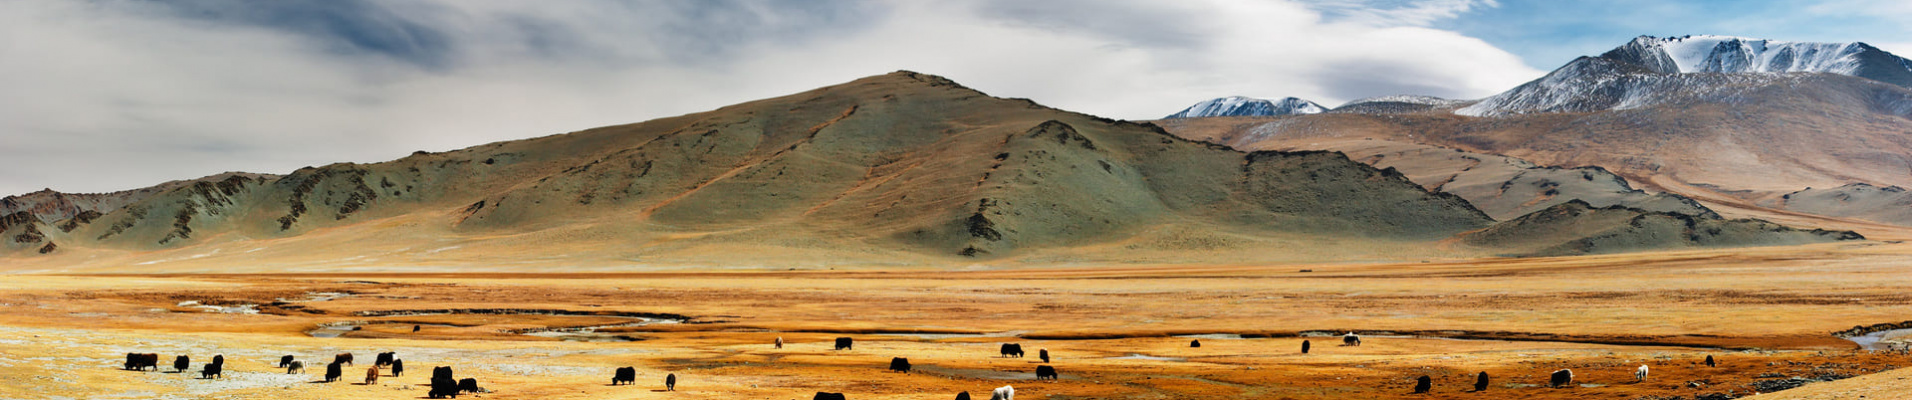 yacks-plaines-mongolie